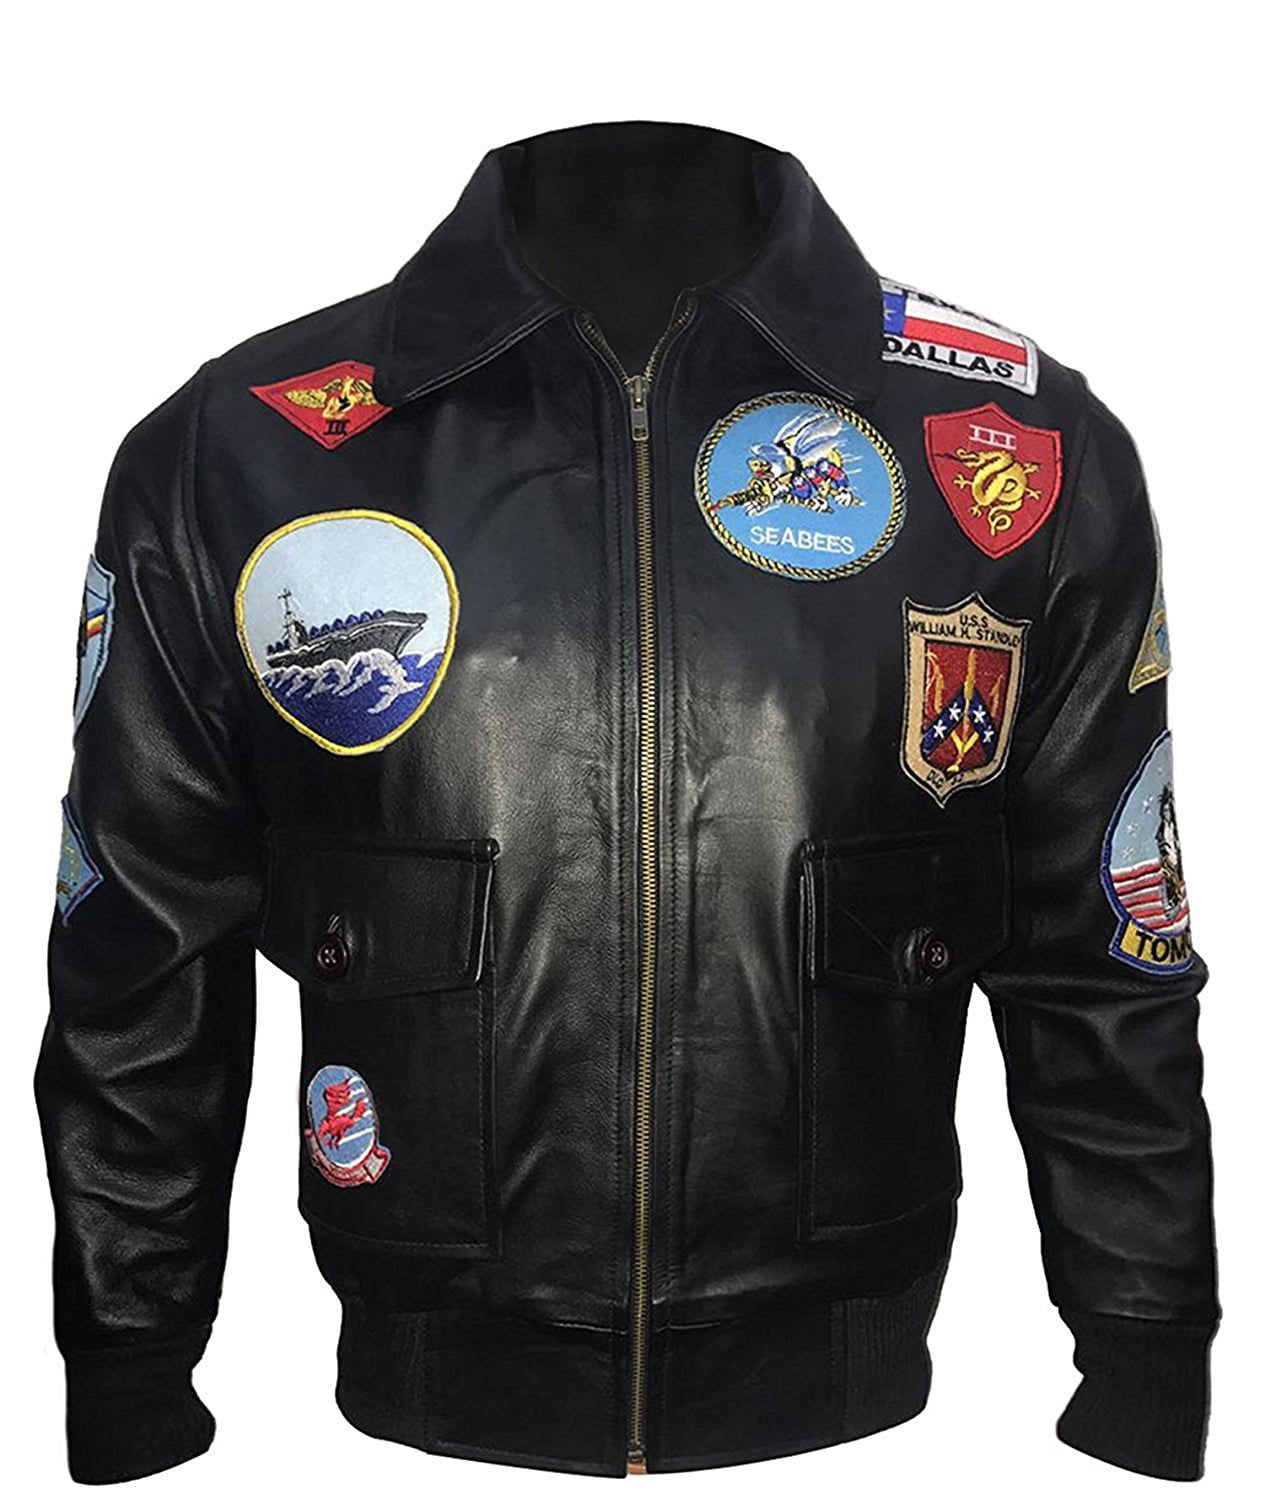 Studiofitter Top Gun Top Cruise Real Black Leather Jacket) Tom Black Fighter Biker Jet Gun A2 Jacket Bomber Leather (XL